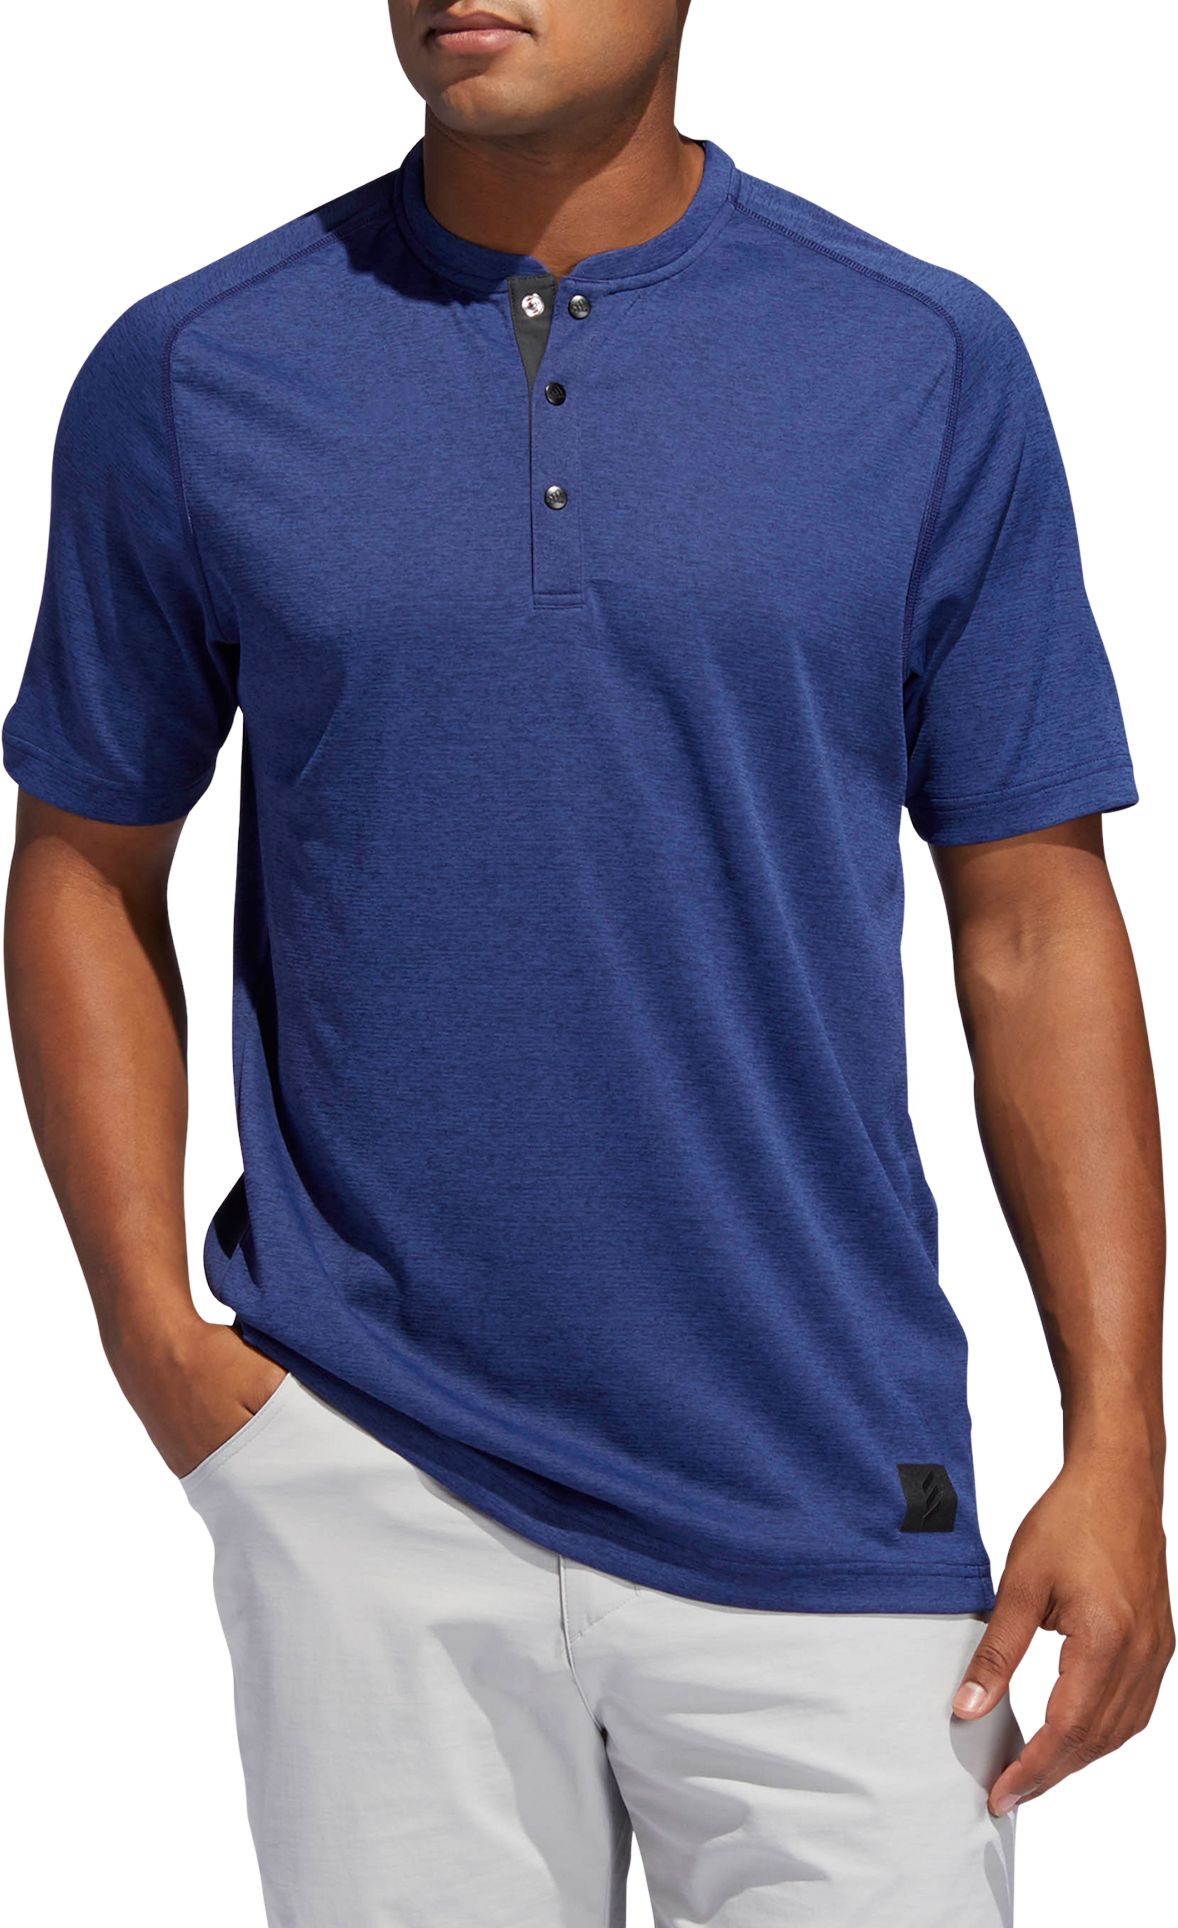 adidas adicross golf shirt